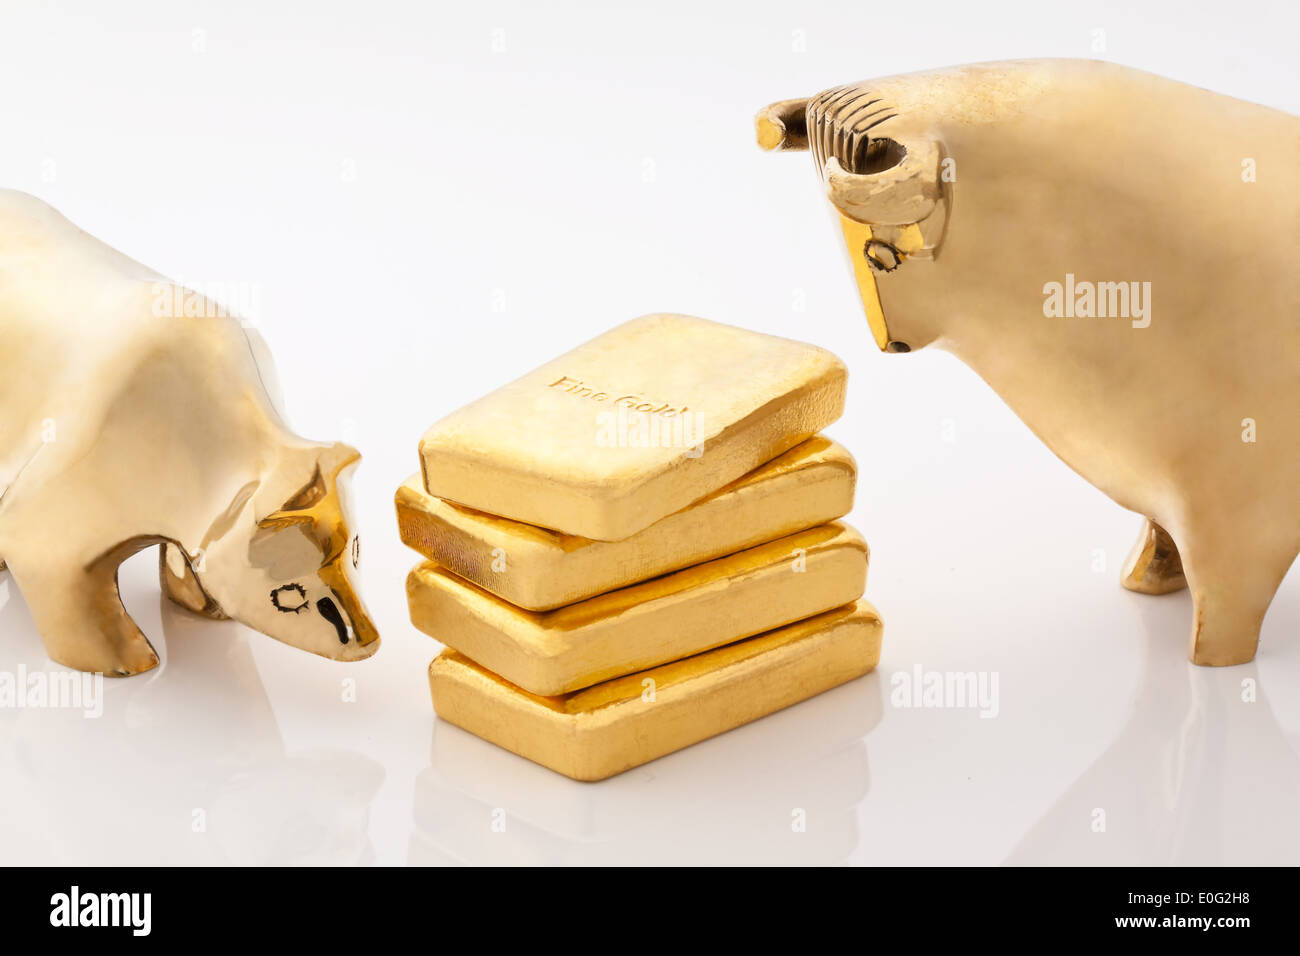 Bull and bear stock exchanges symbols with gold bar, Bulle und Baer Boersen  Symbole mit Goldbarren Stock Photo - Alamy